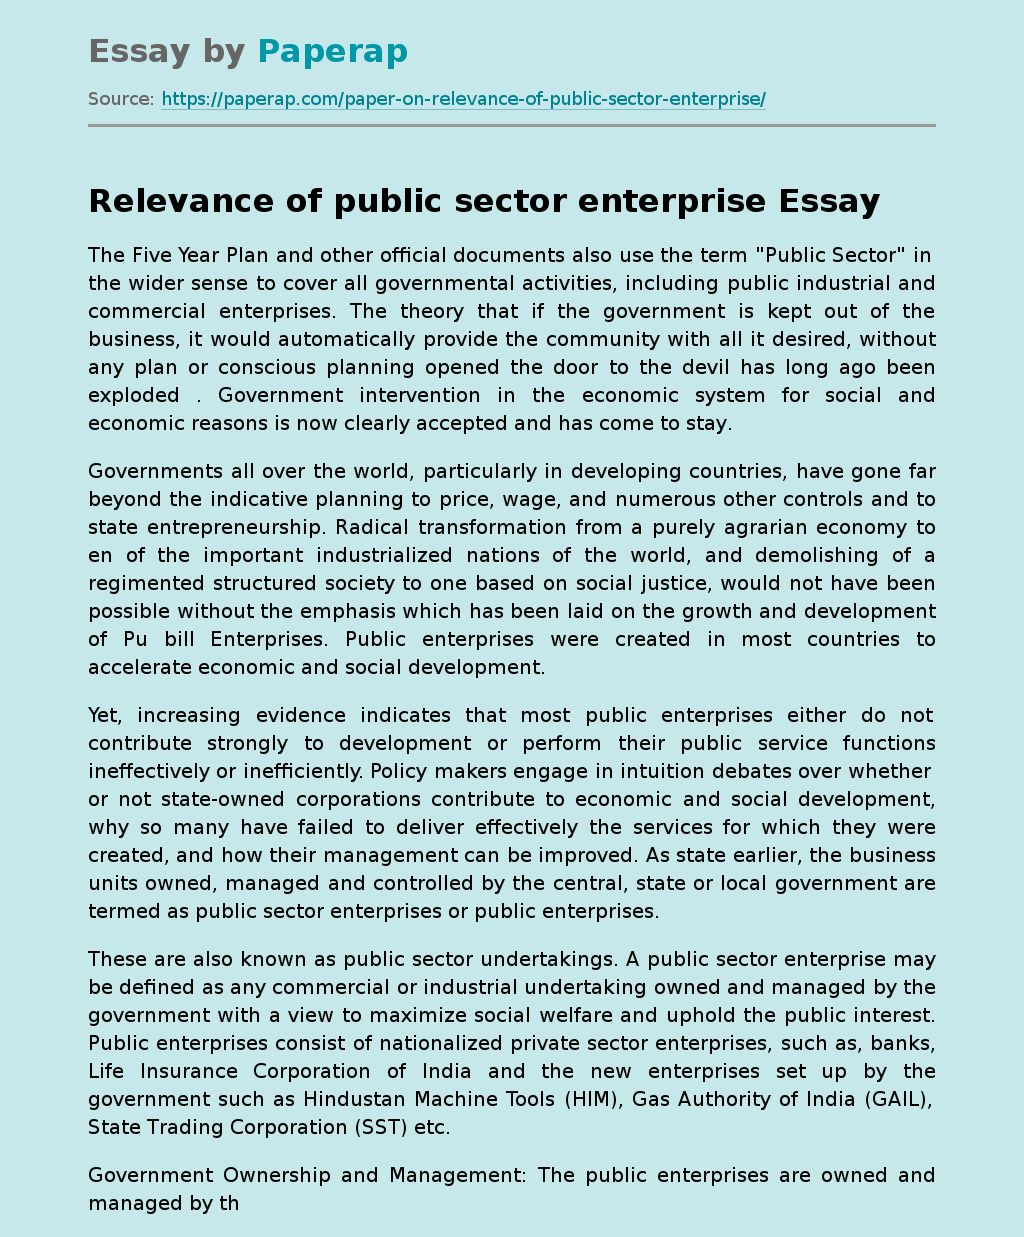 Relevance of public sector enterprise